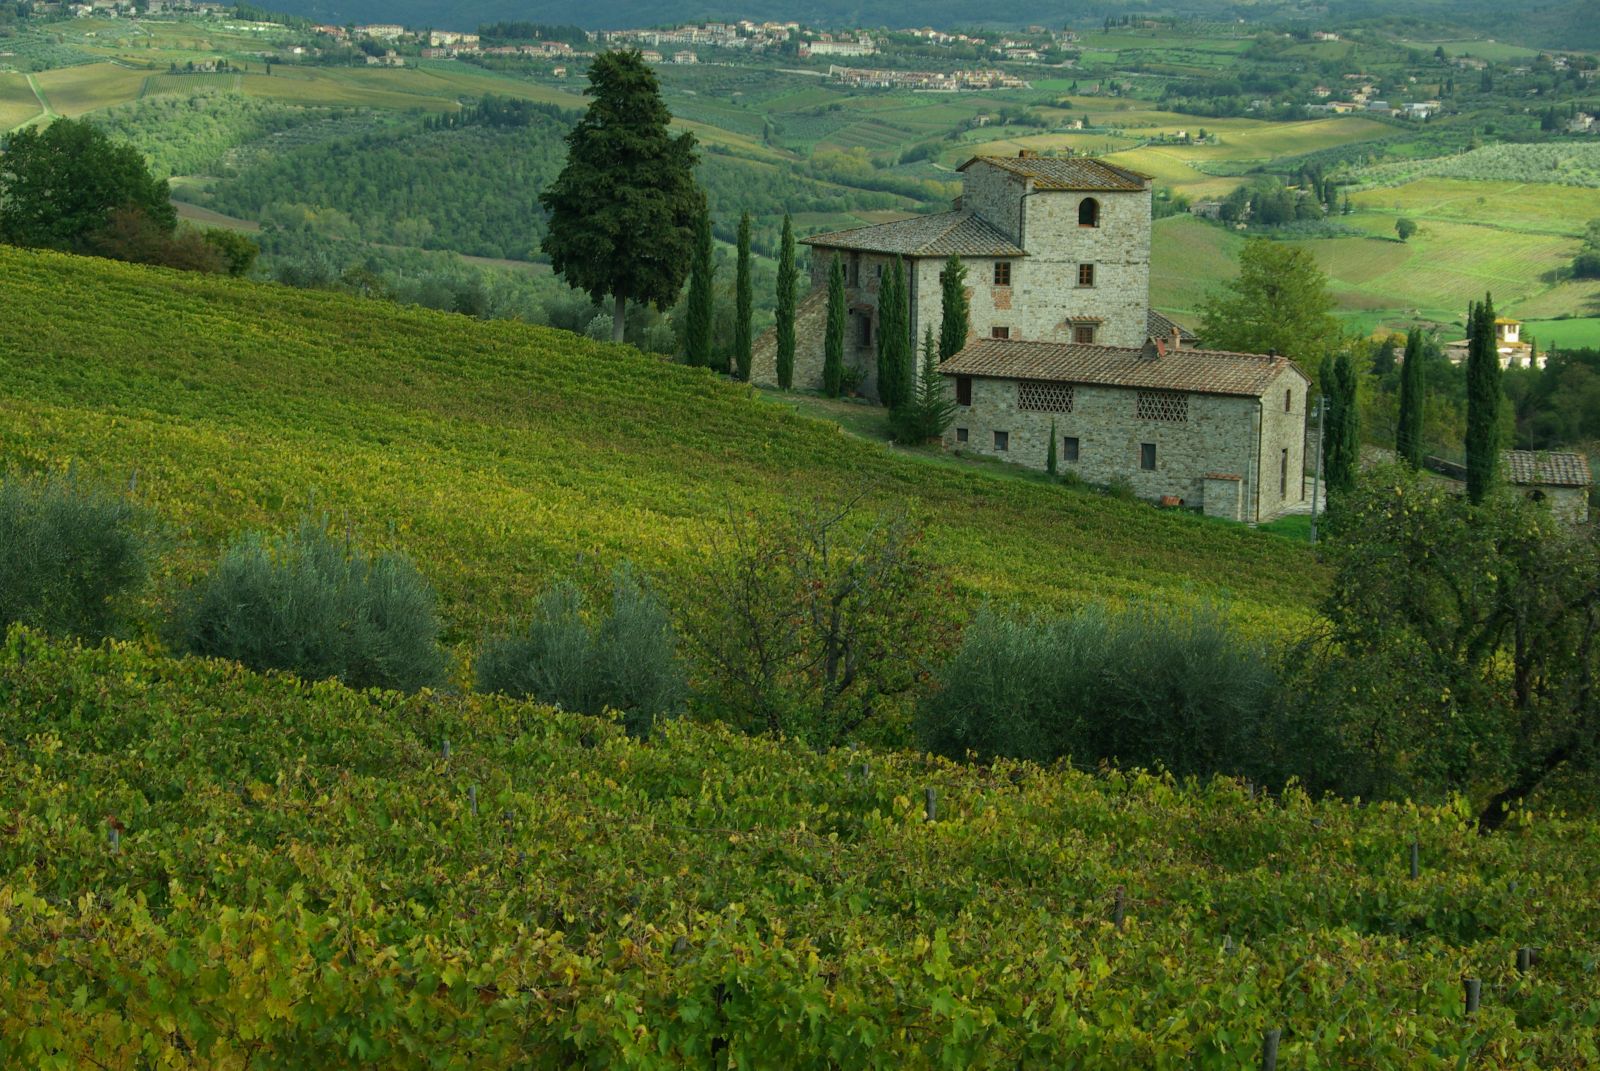 Tuscany and agriturismo